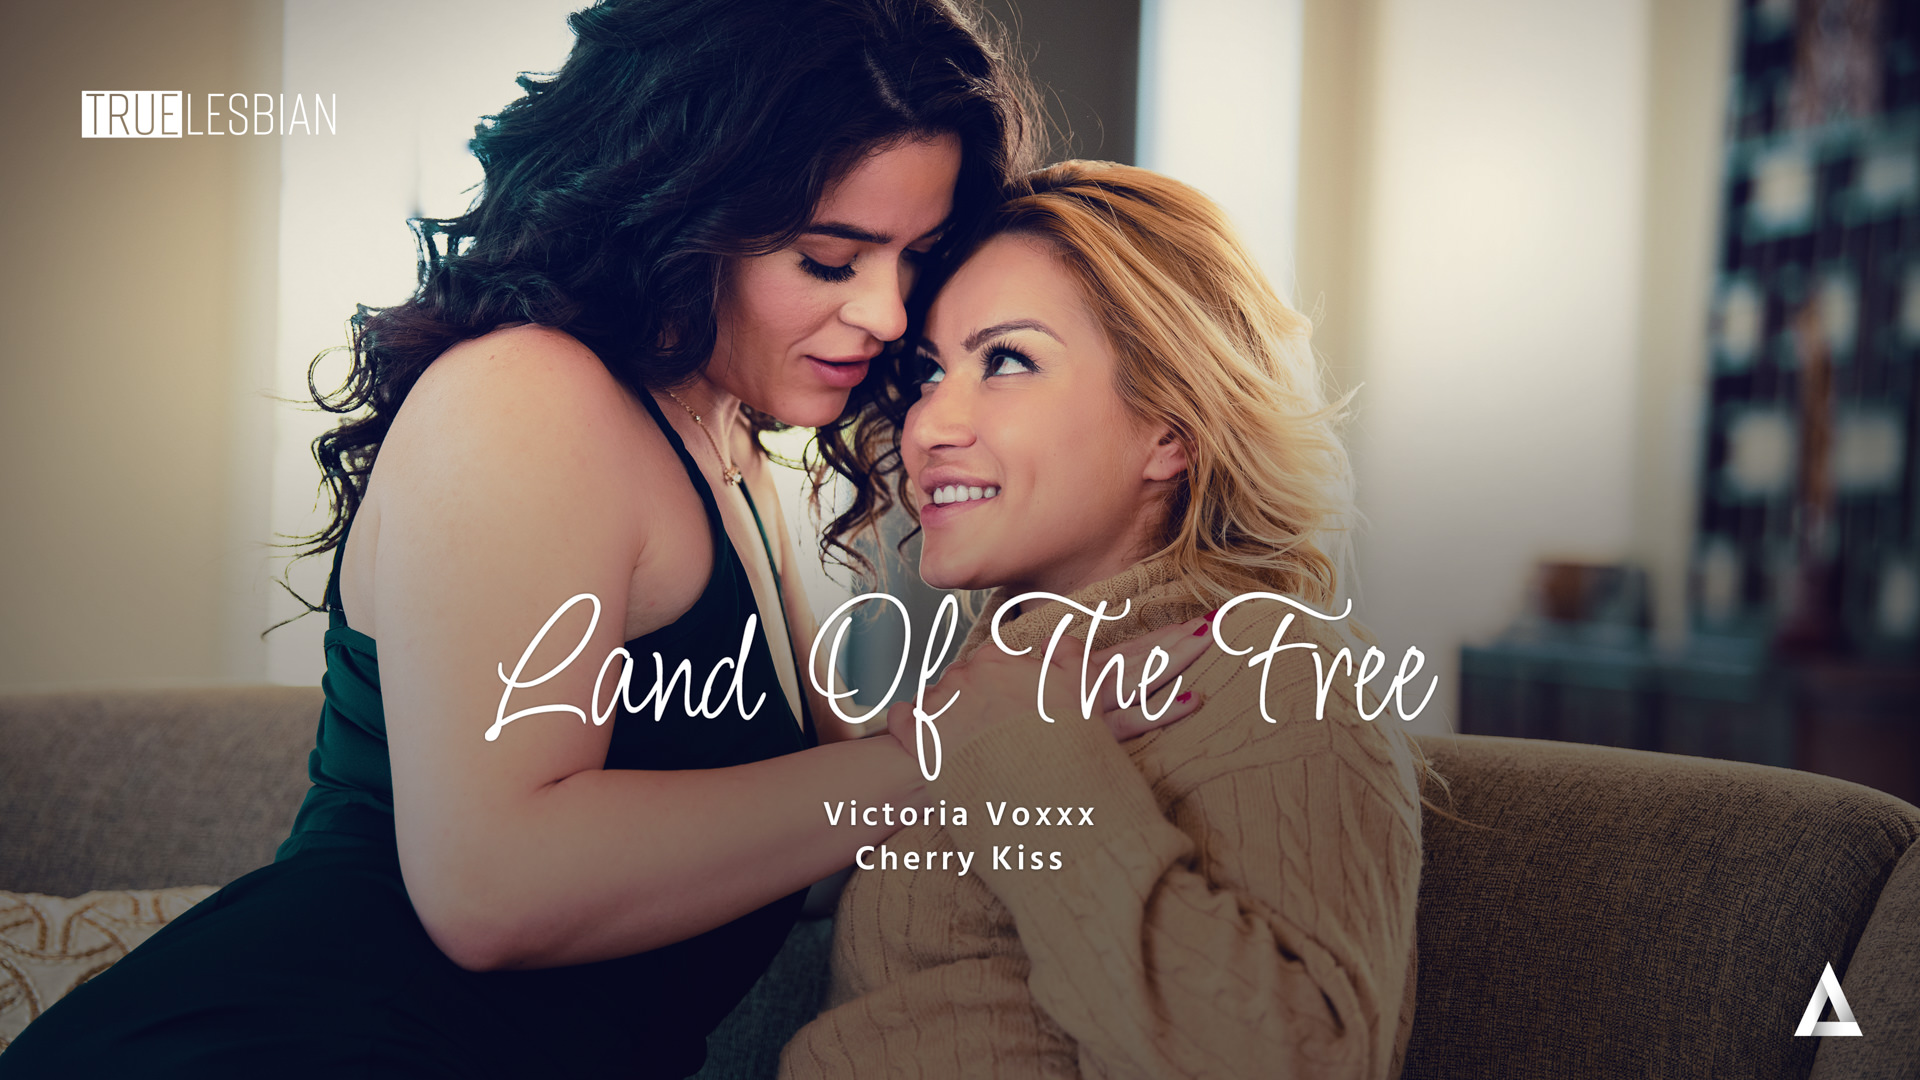 Victoria Voxxx, Cherry Kiss “Land Of The Free” TrueLesbian